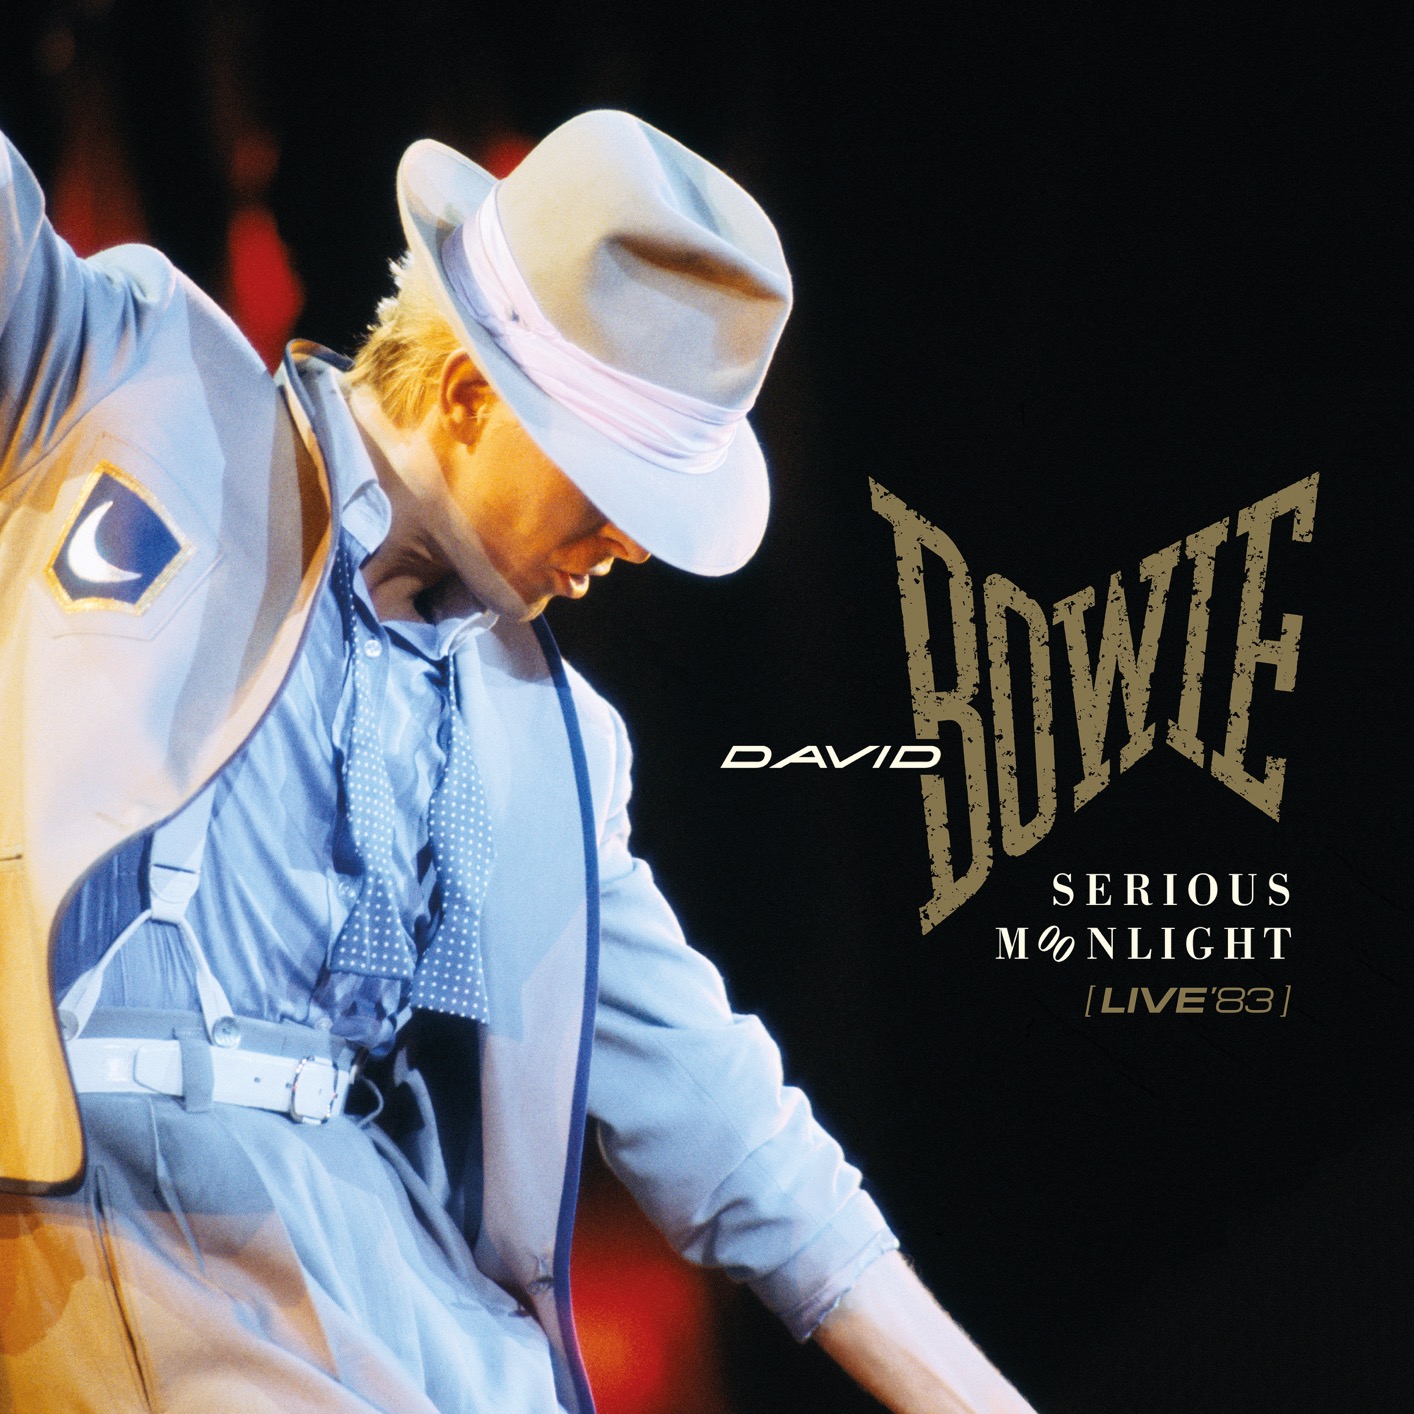 David Bowie - Serious Moonlight (Live ’83, 2018 Remastered Version) (2019) [FLAC 24bit/96kHz]